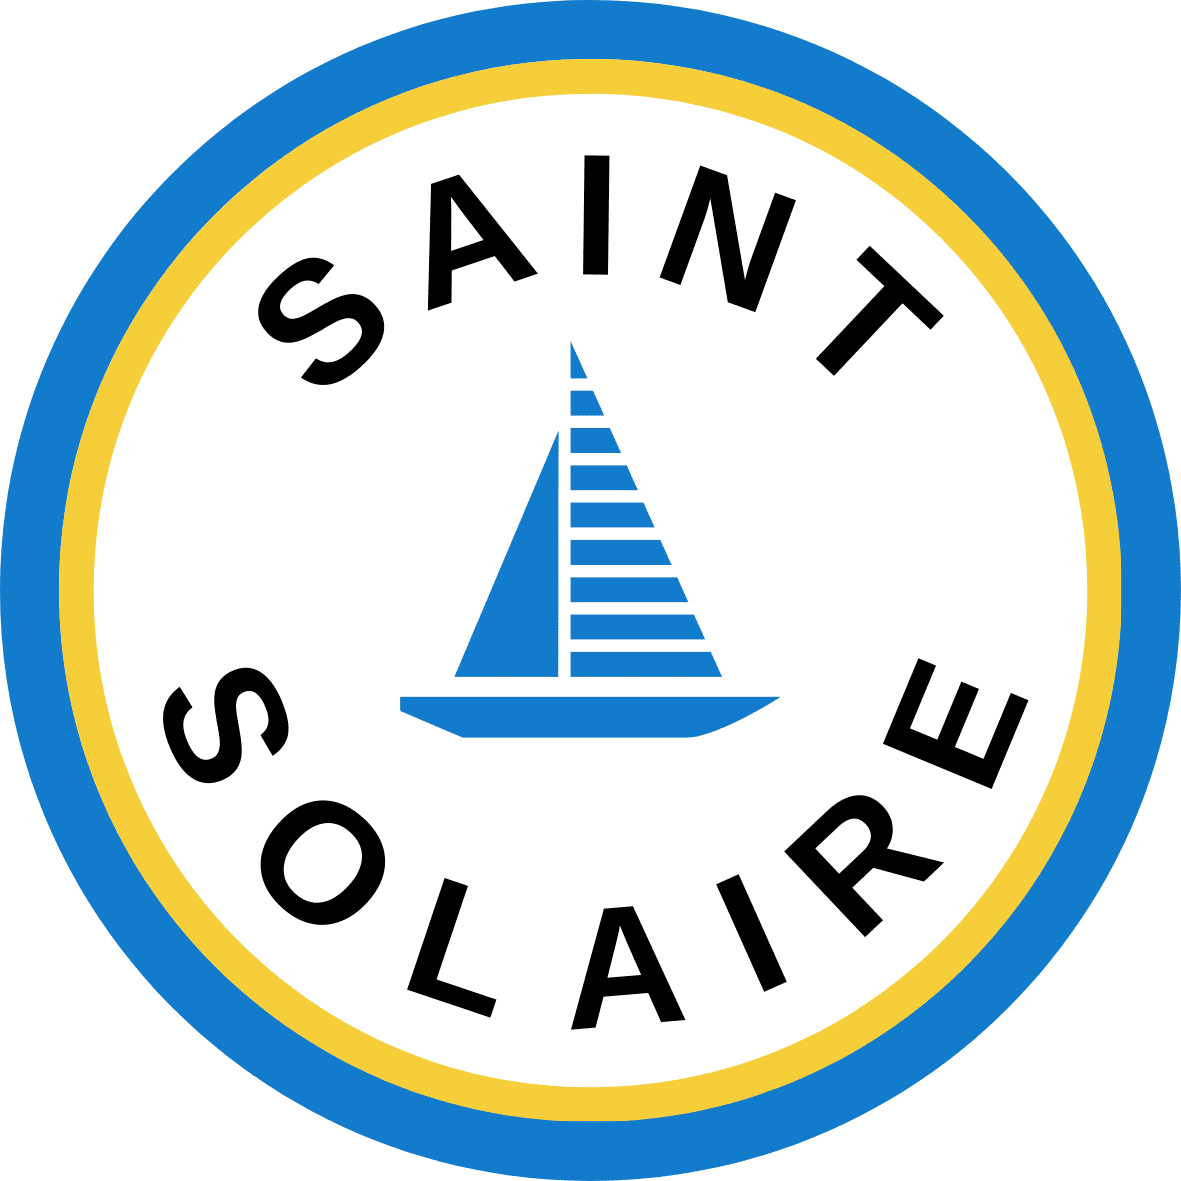 Saint Solaire Skincare